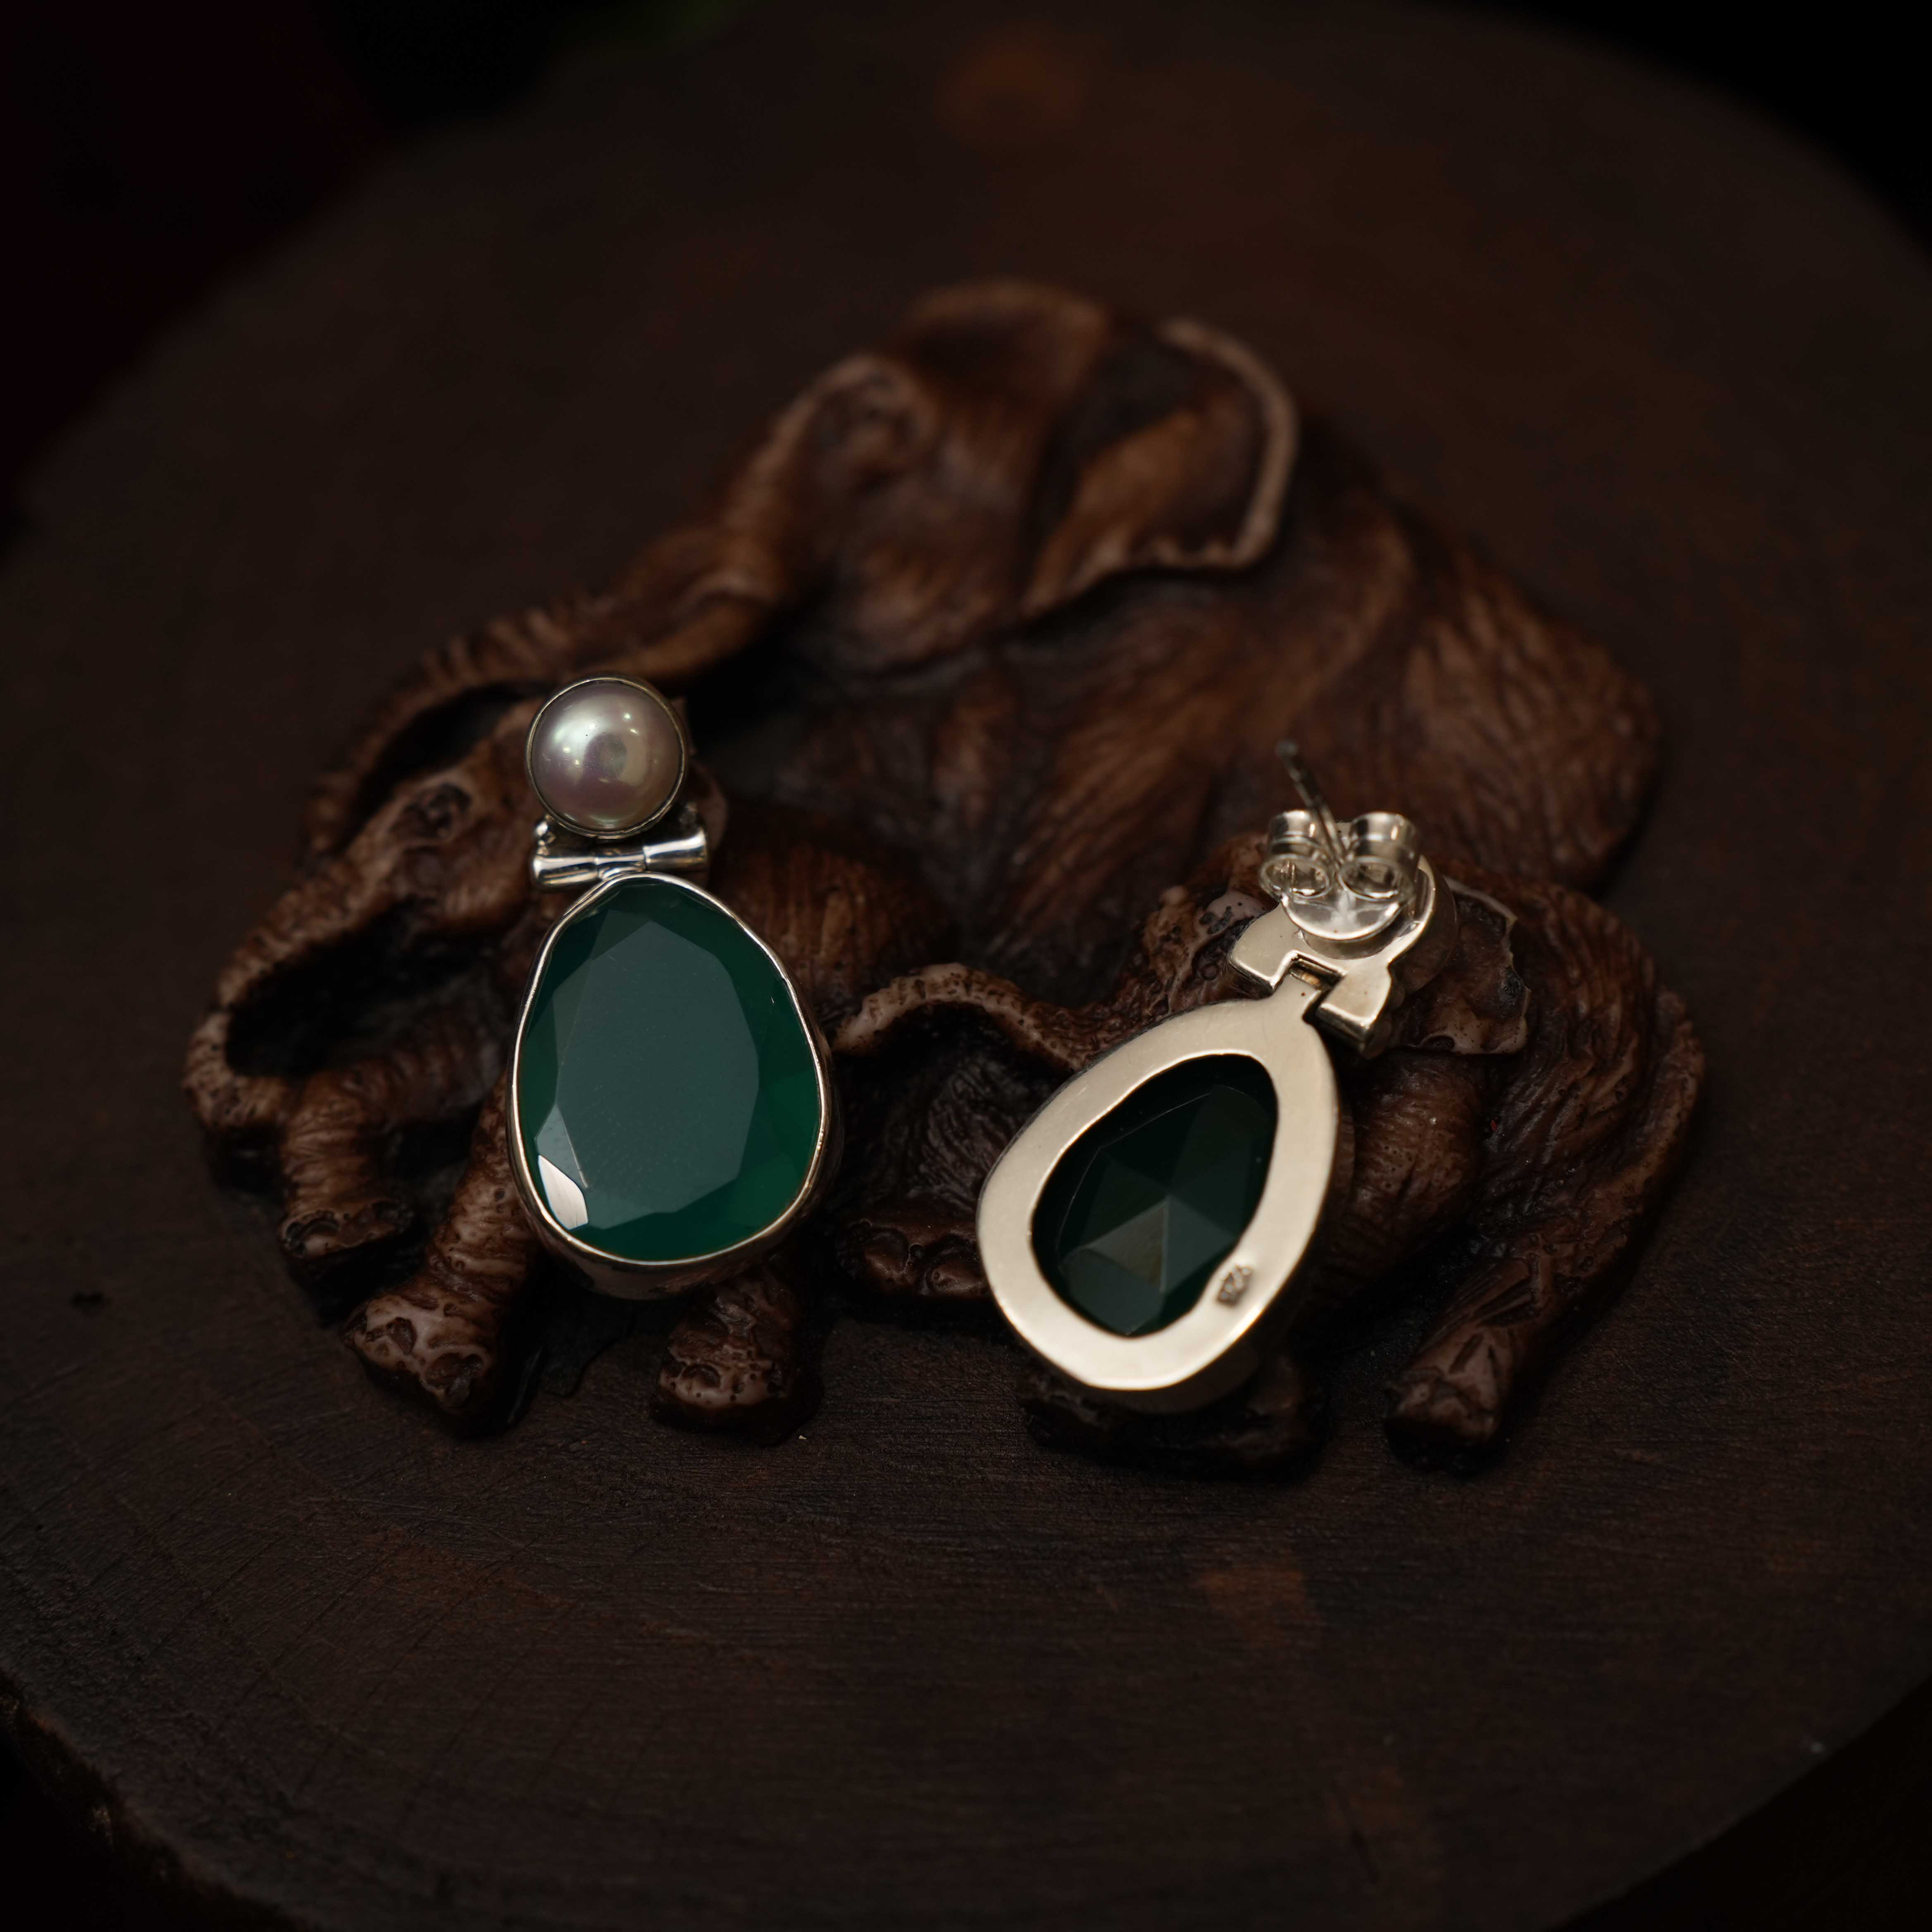 Rushmitha 925 Oxidized Silver Earrings - Green